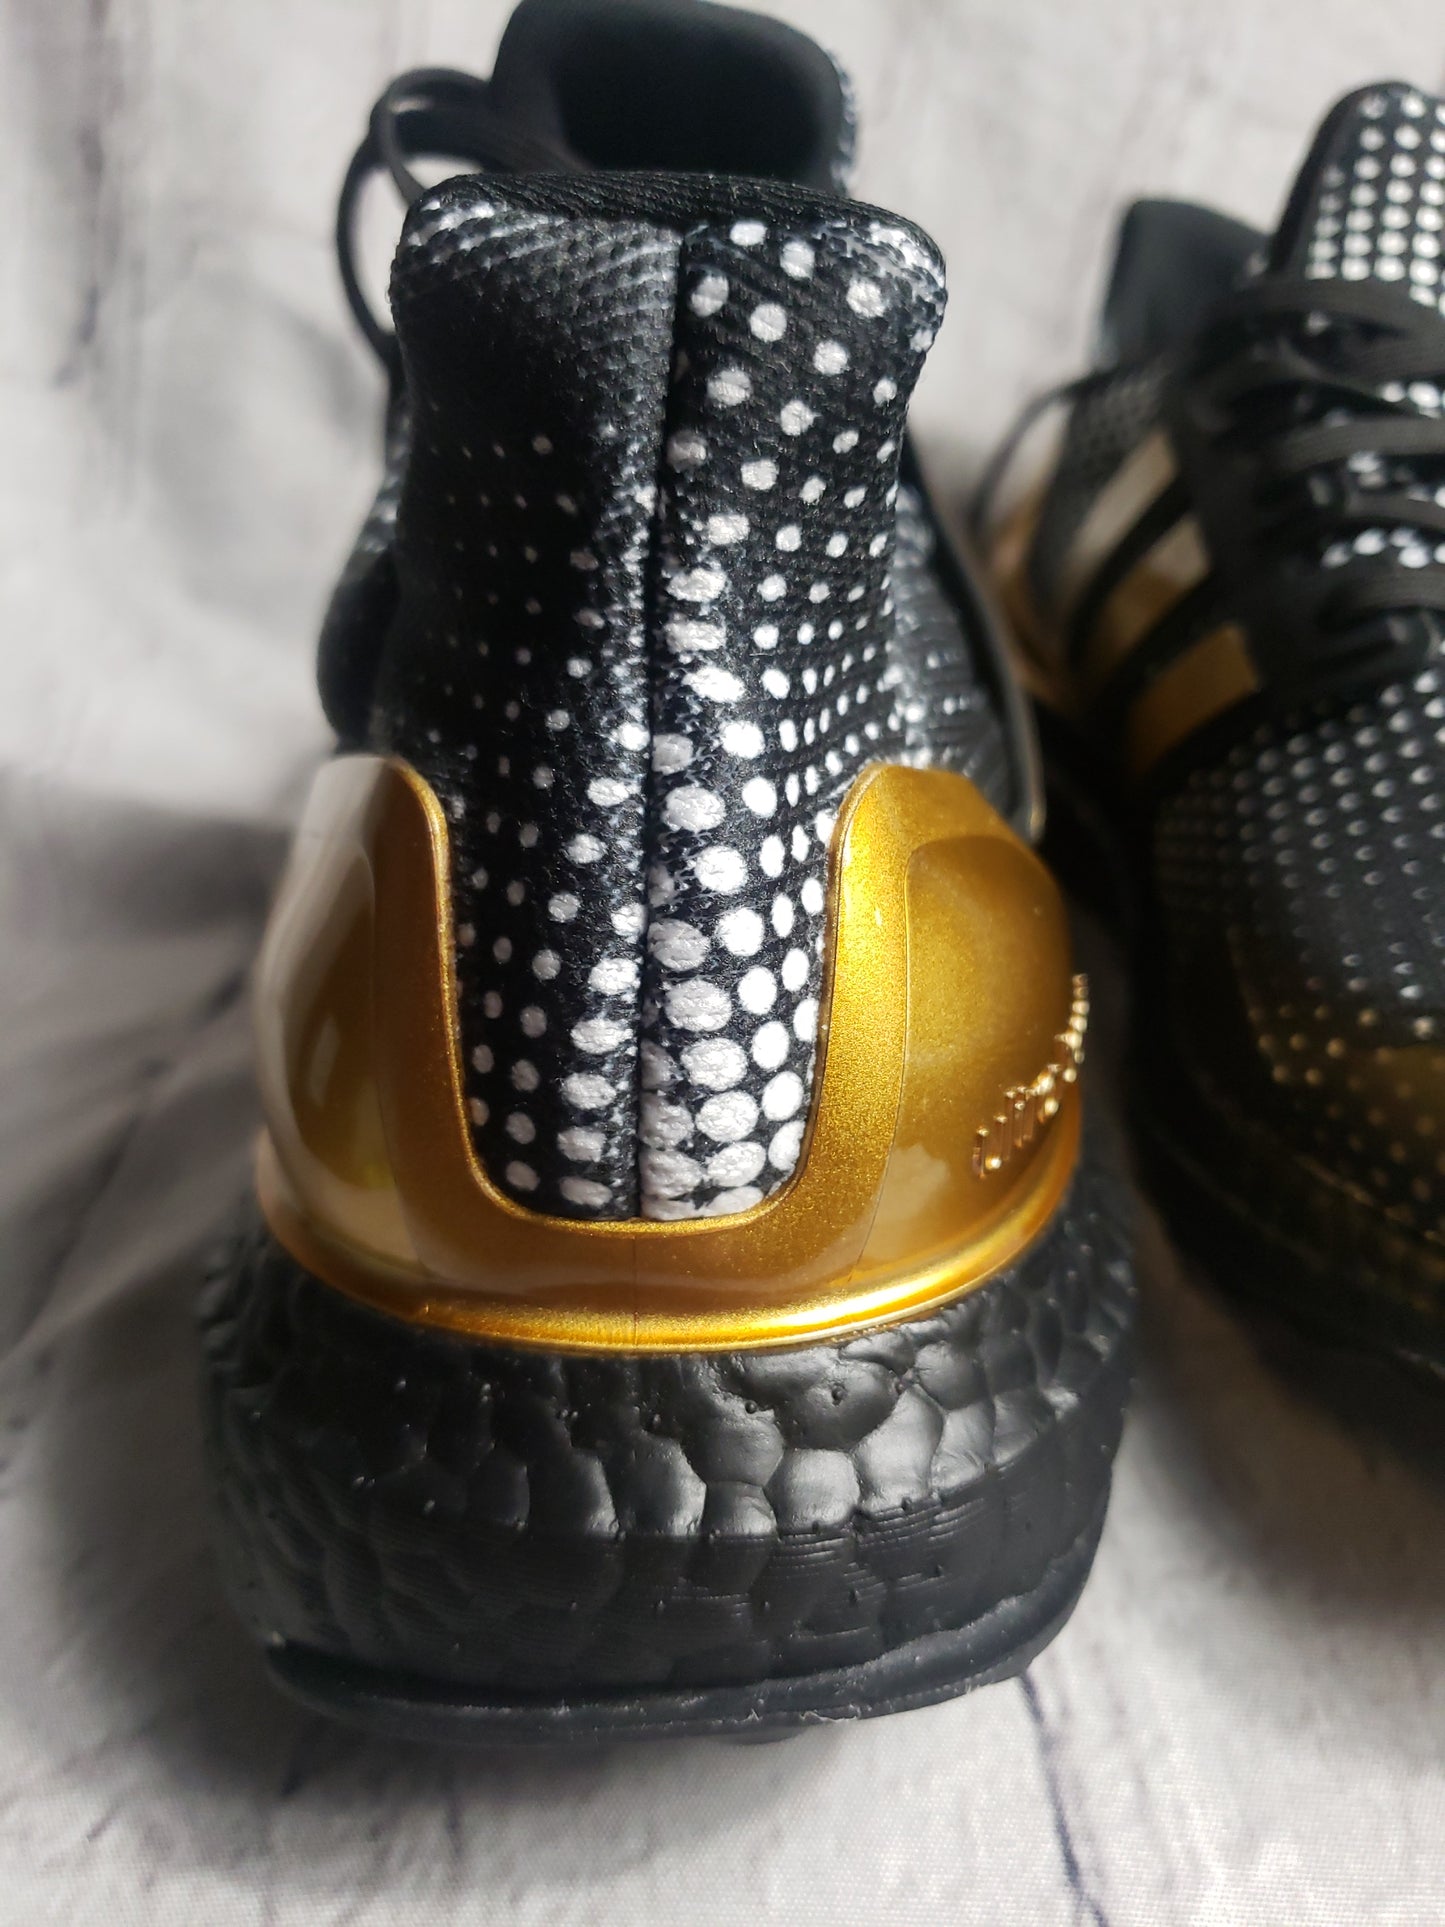 Adidas UltraBoost DNA Patrick Mahomes Mens Size 9.5 Core Black Gold H02868 Rare